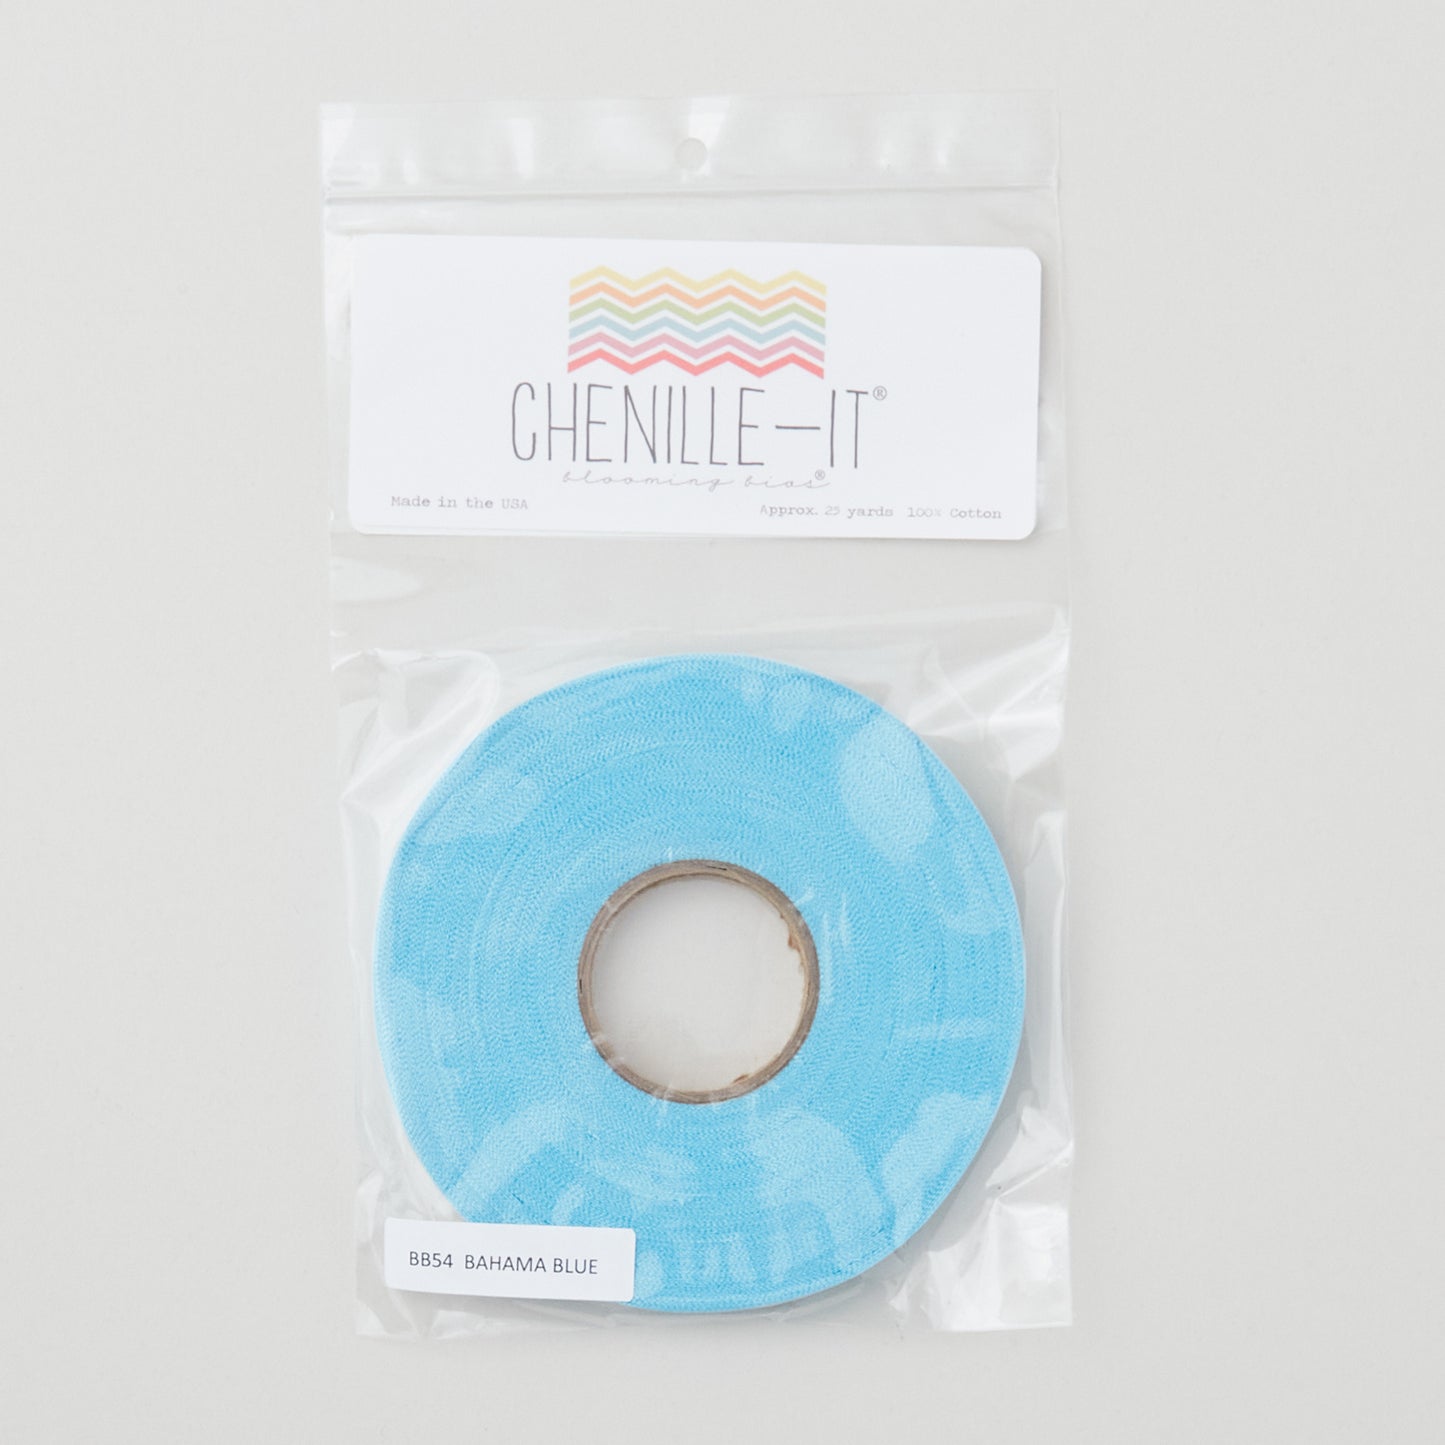 Chenille-It Blooming Bias Sew & Wash Trim - 3/8" Bahama Blue Alternative View #1